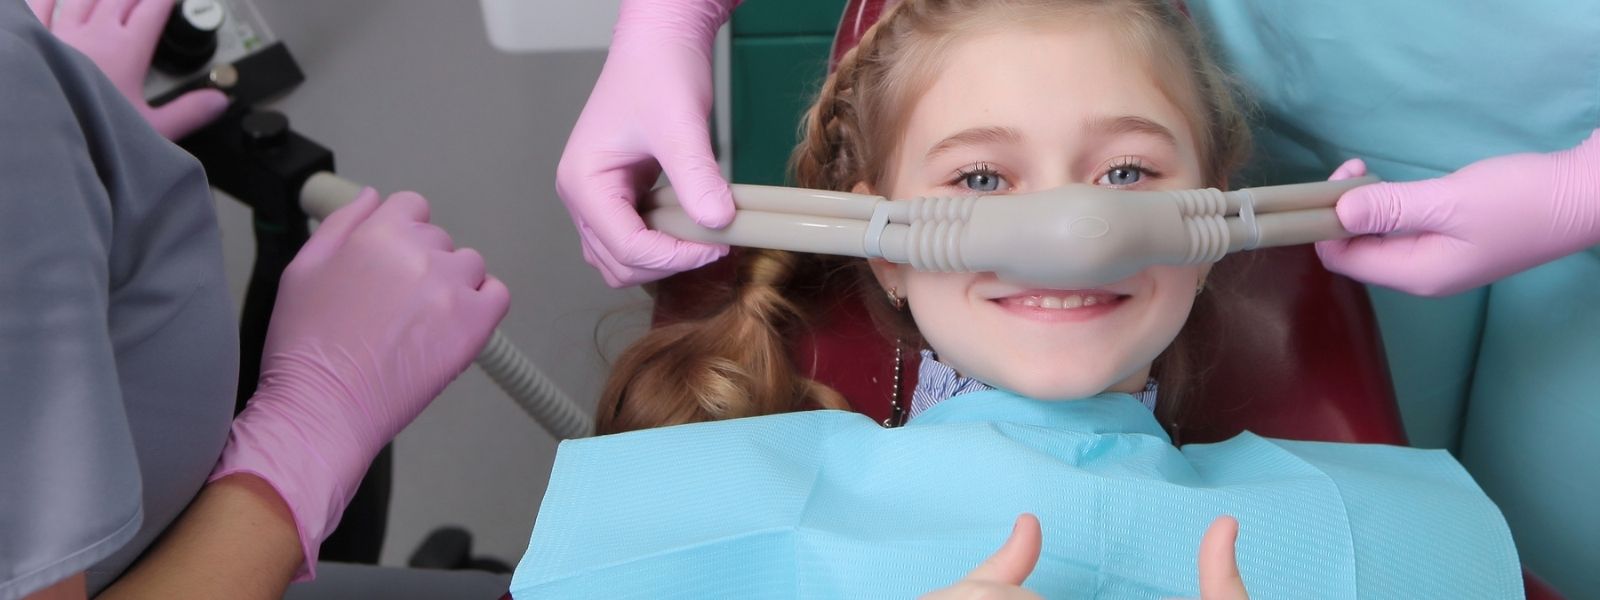 Young girl getting sedate at Dental